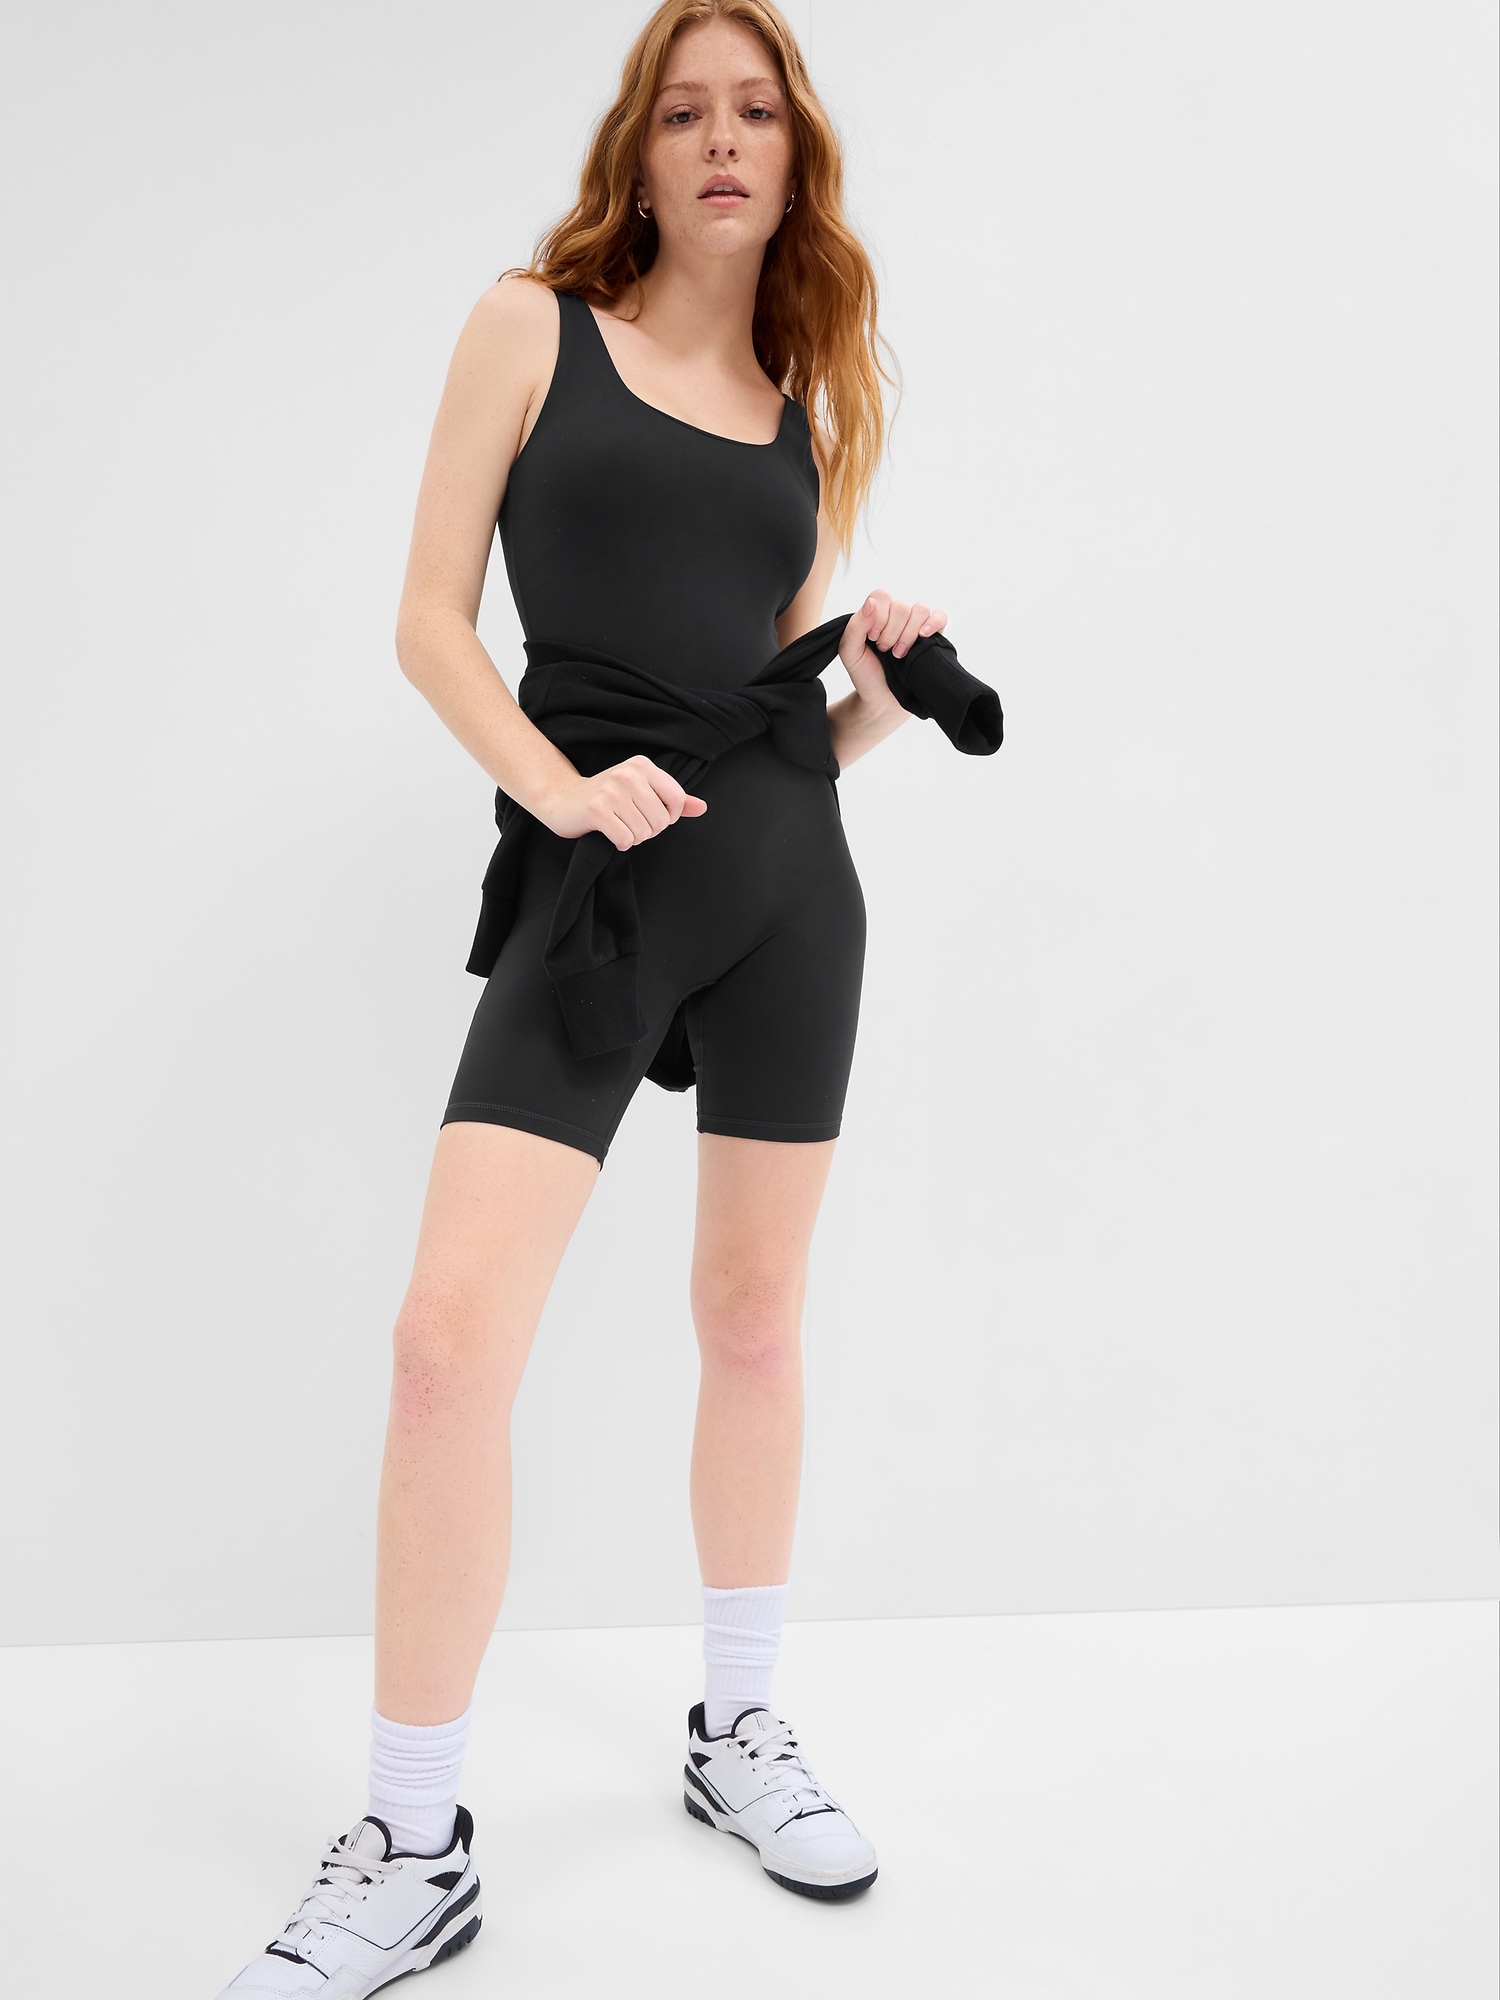 GapFit Studio Fitted Short Bodysuit | Gap Factory